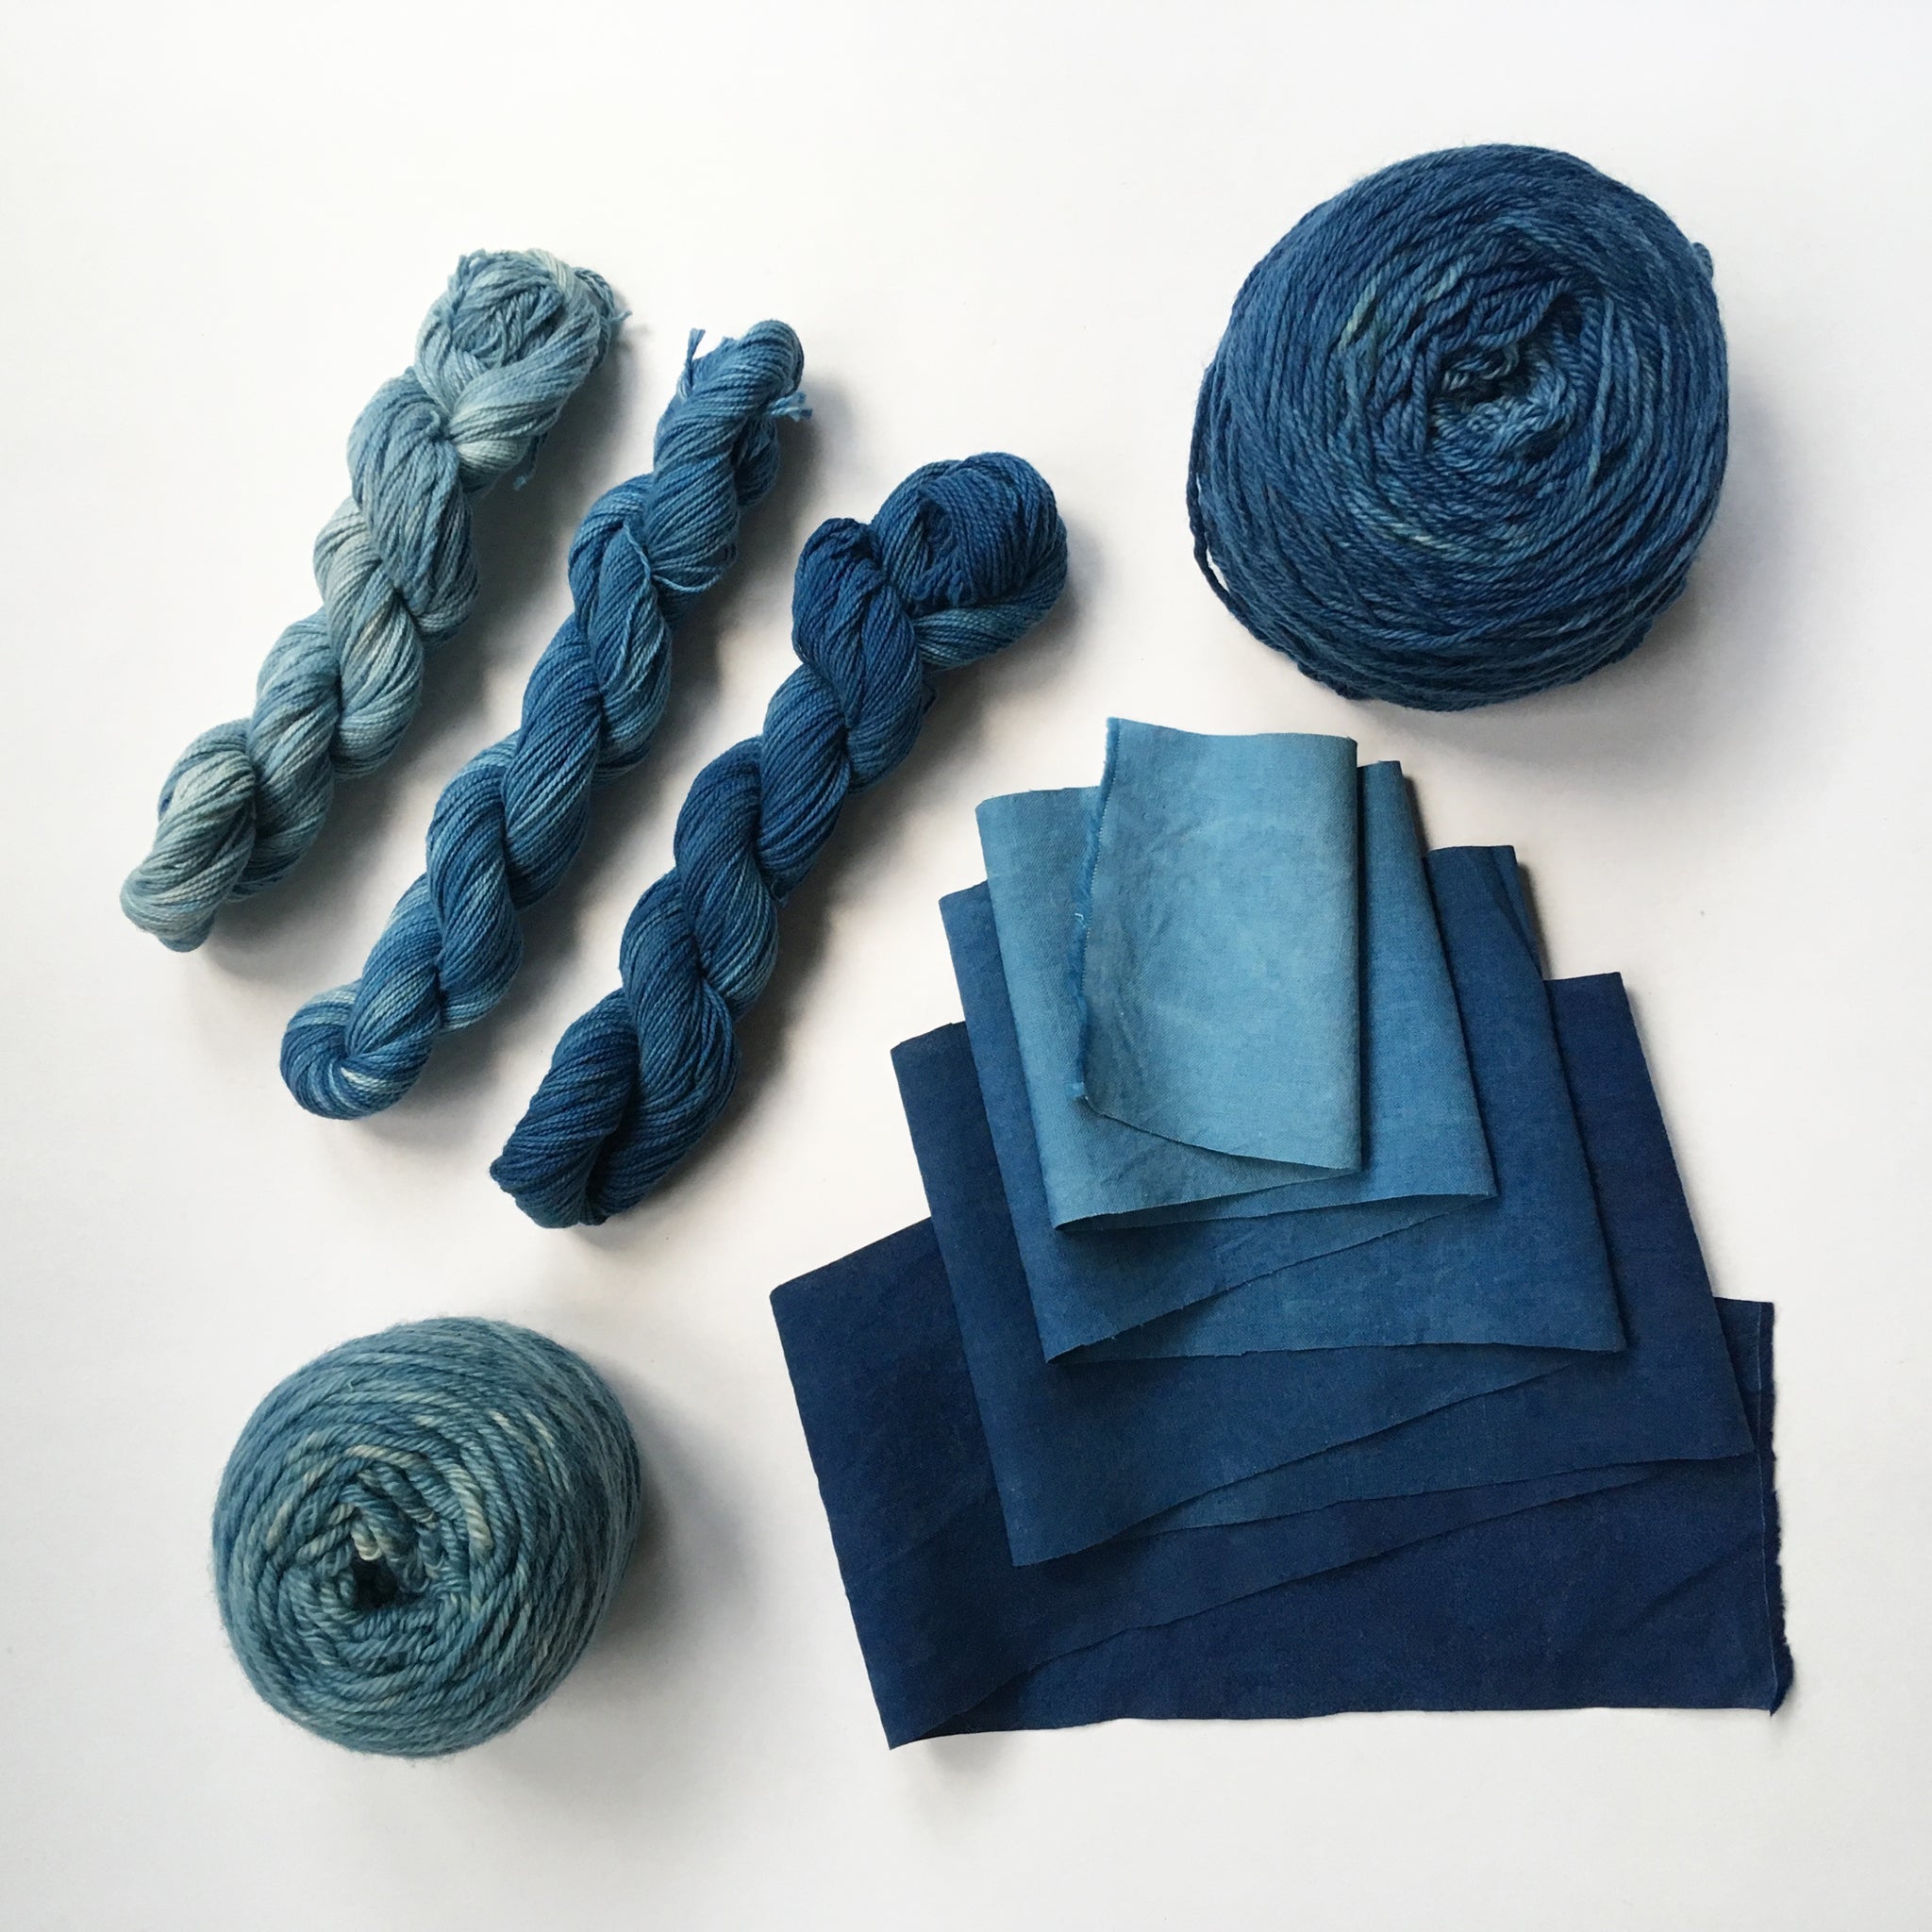 Examples of yarn and fabrics dyed with indigo kit